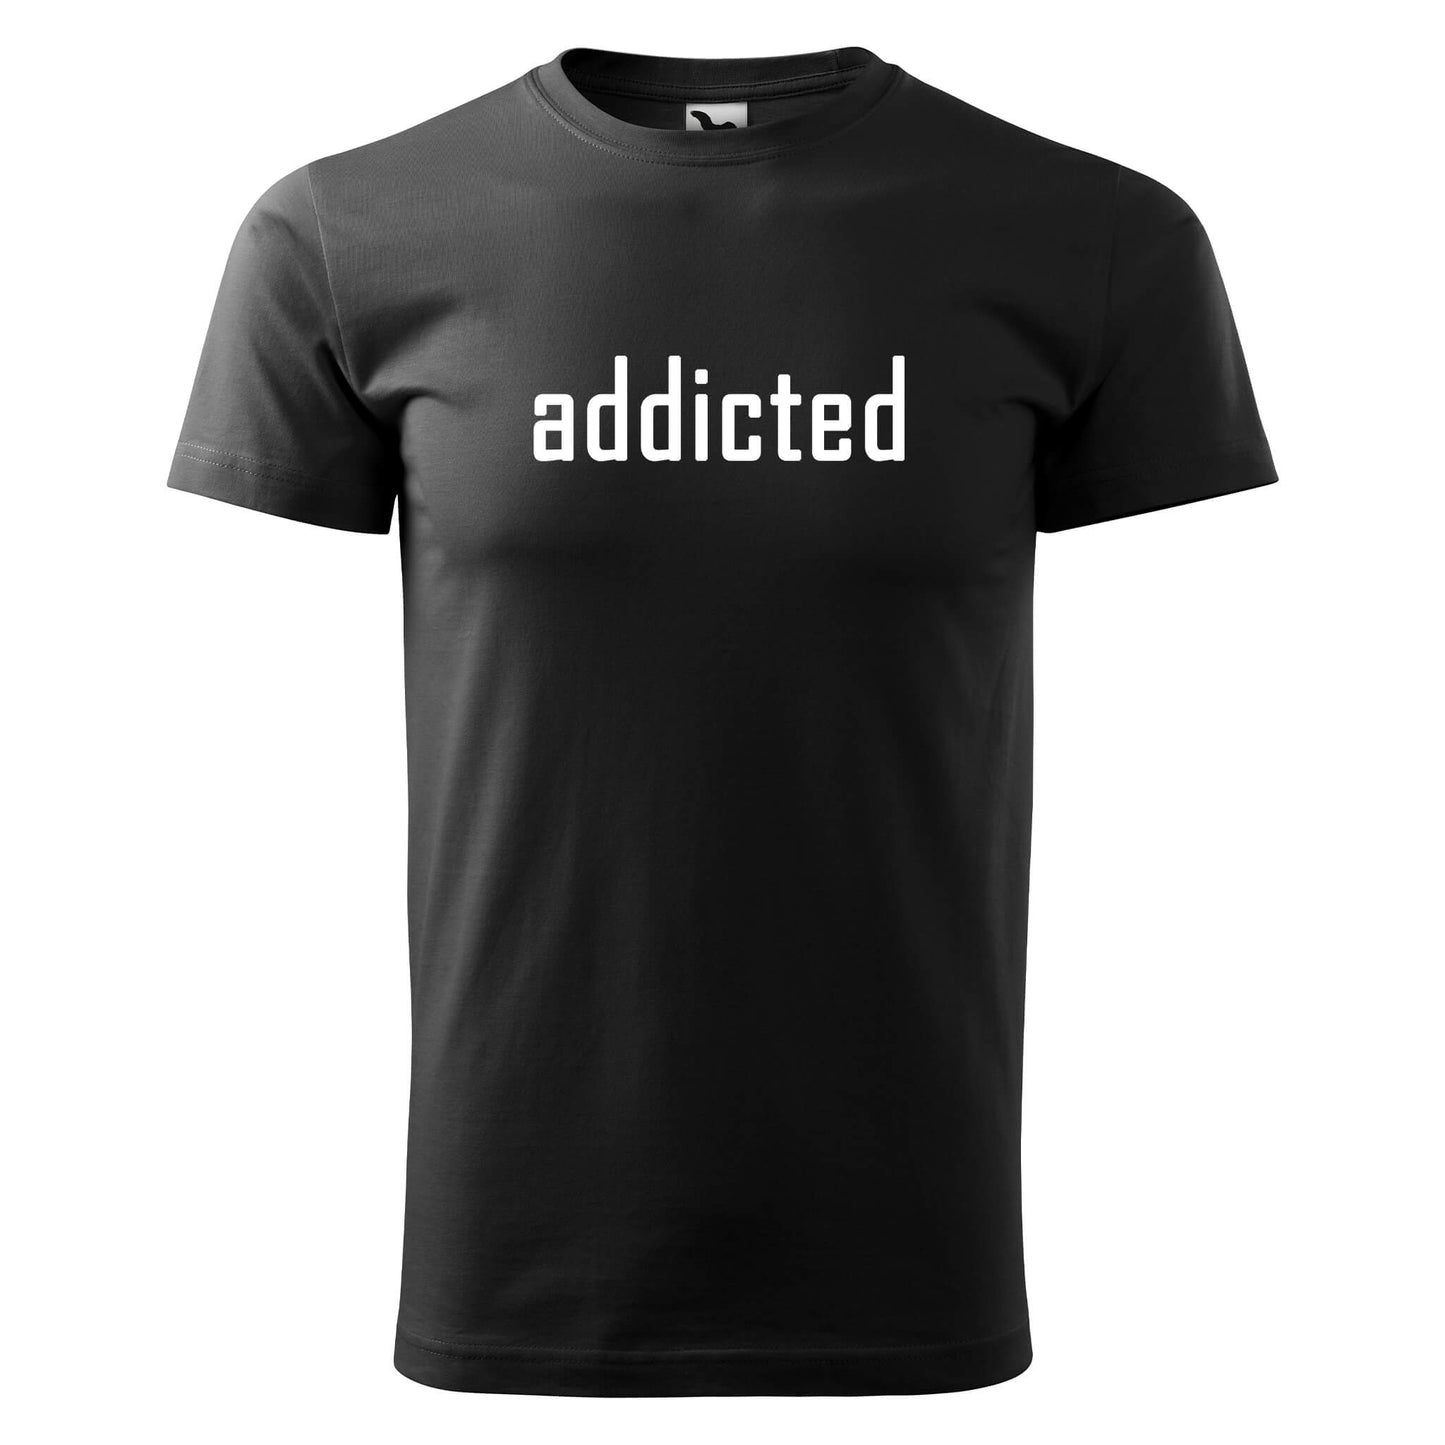 T-shirt - addicted - rvdesignprint